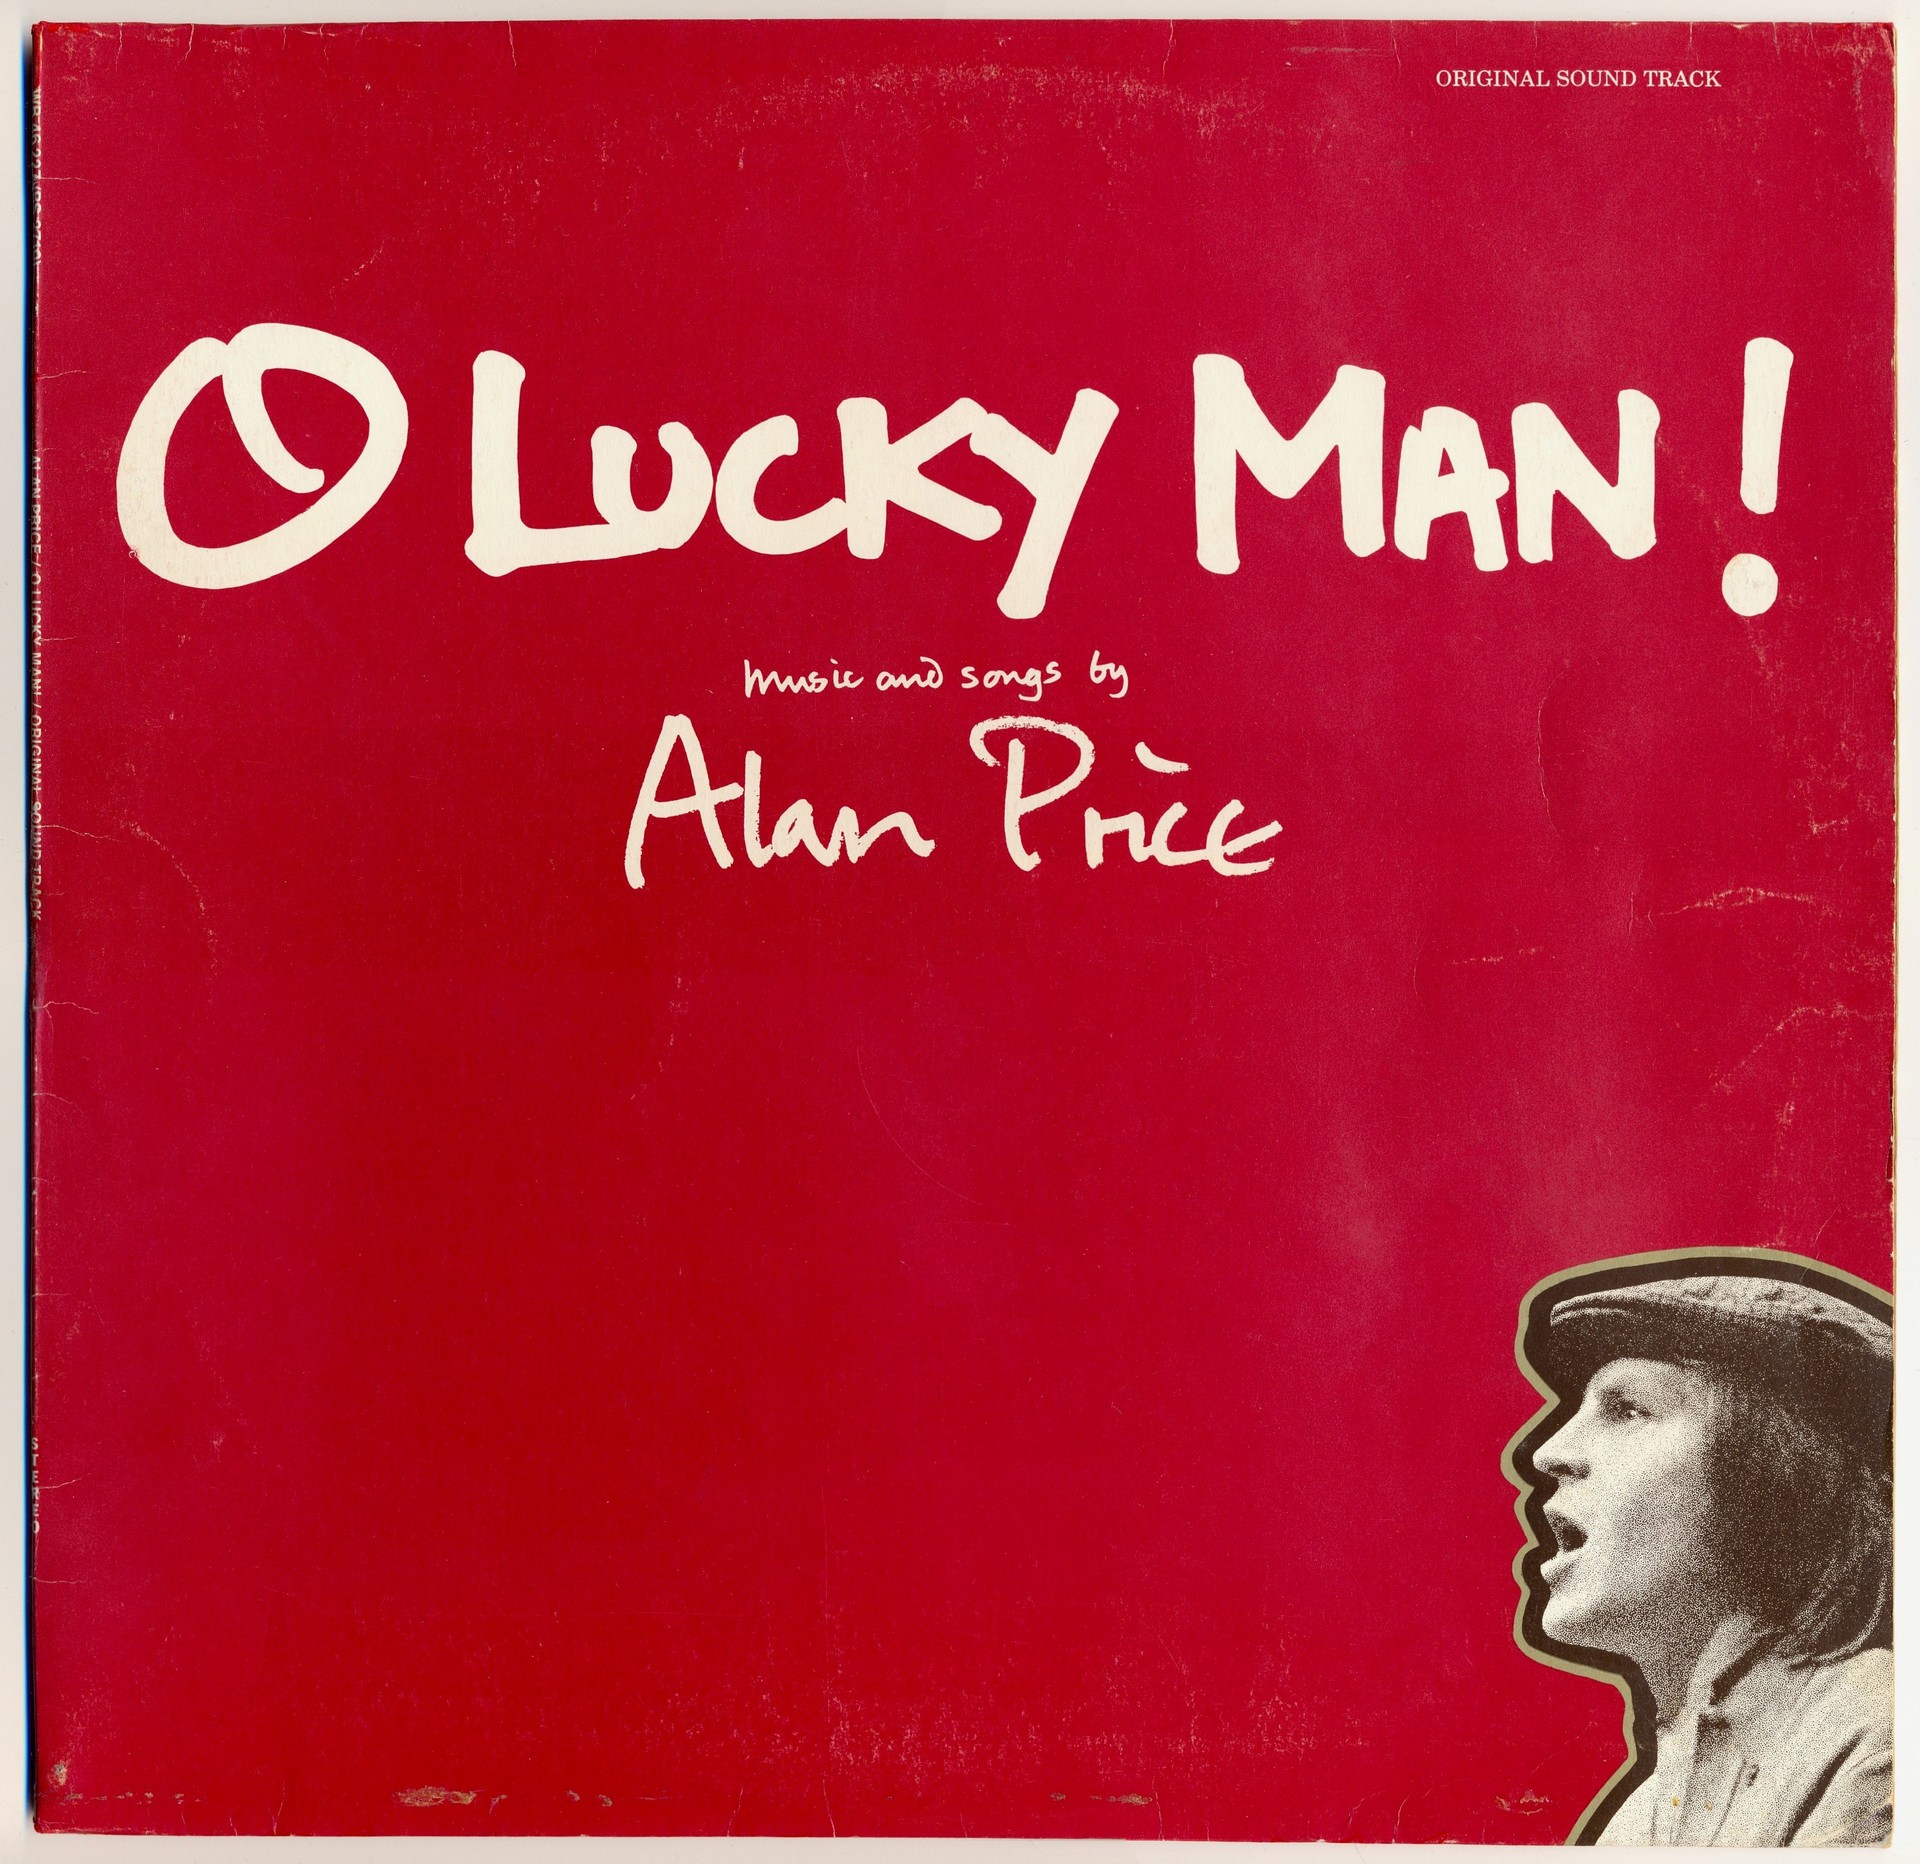 Alan Price 1973 O Lucky Man! - Original Soundtrack LP face.jpg